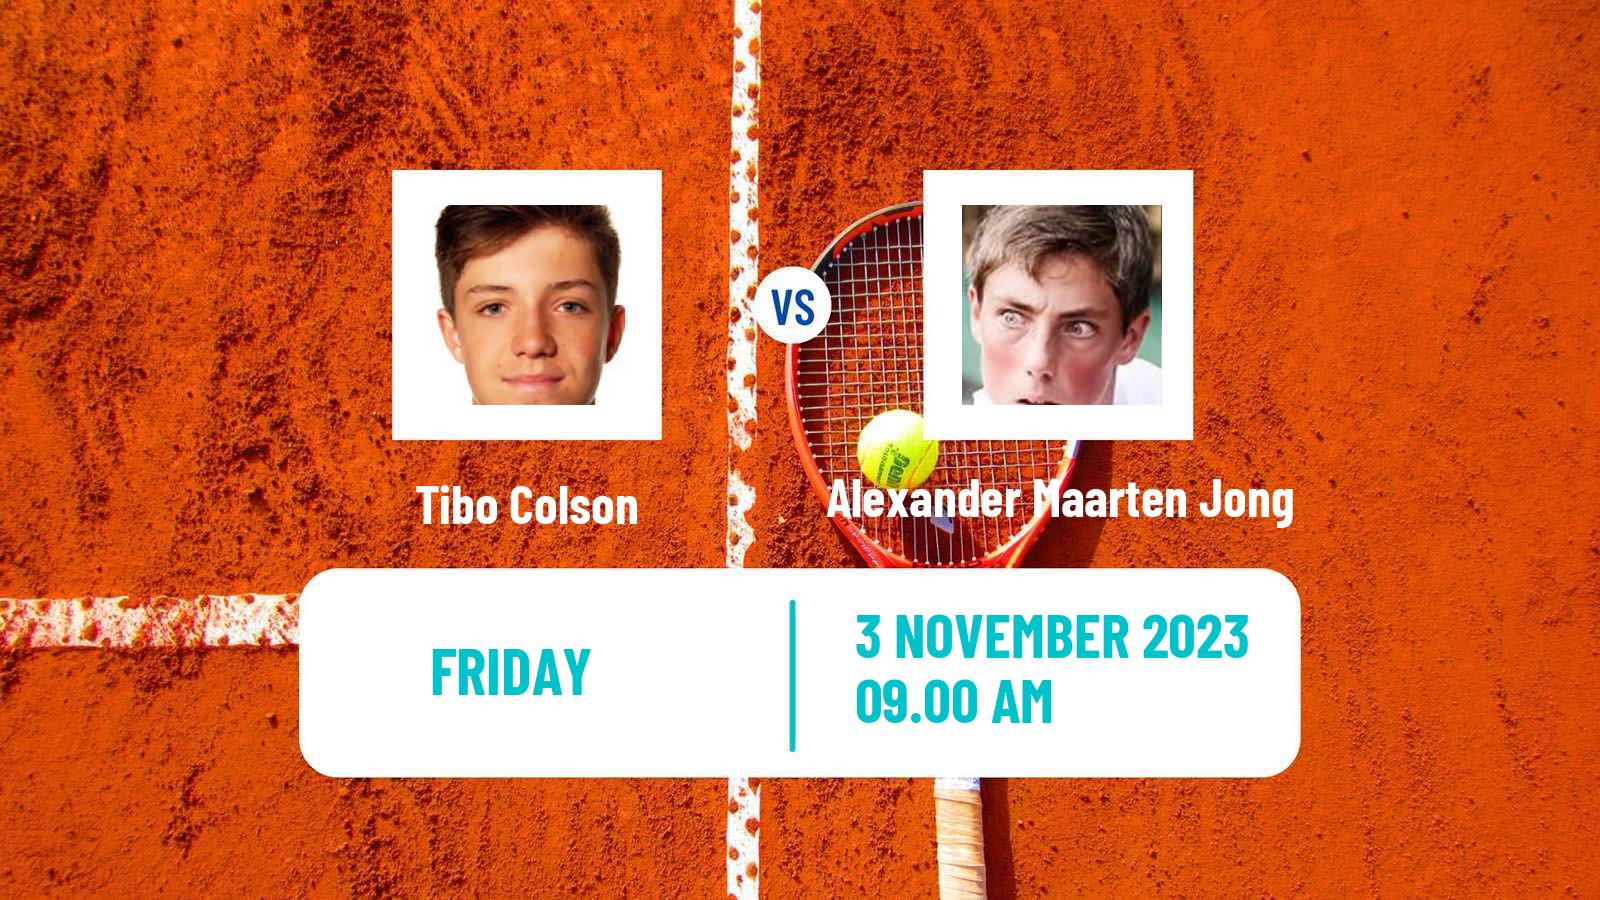 Tennis ITF M25 Sunderland 2 Men Tibo Colson - Alexander Maarten Jong